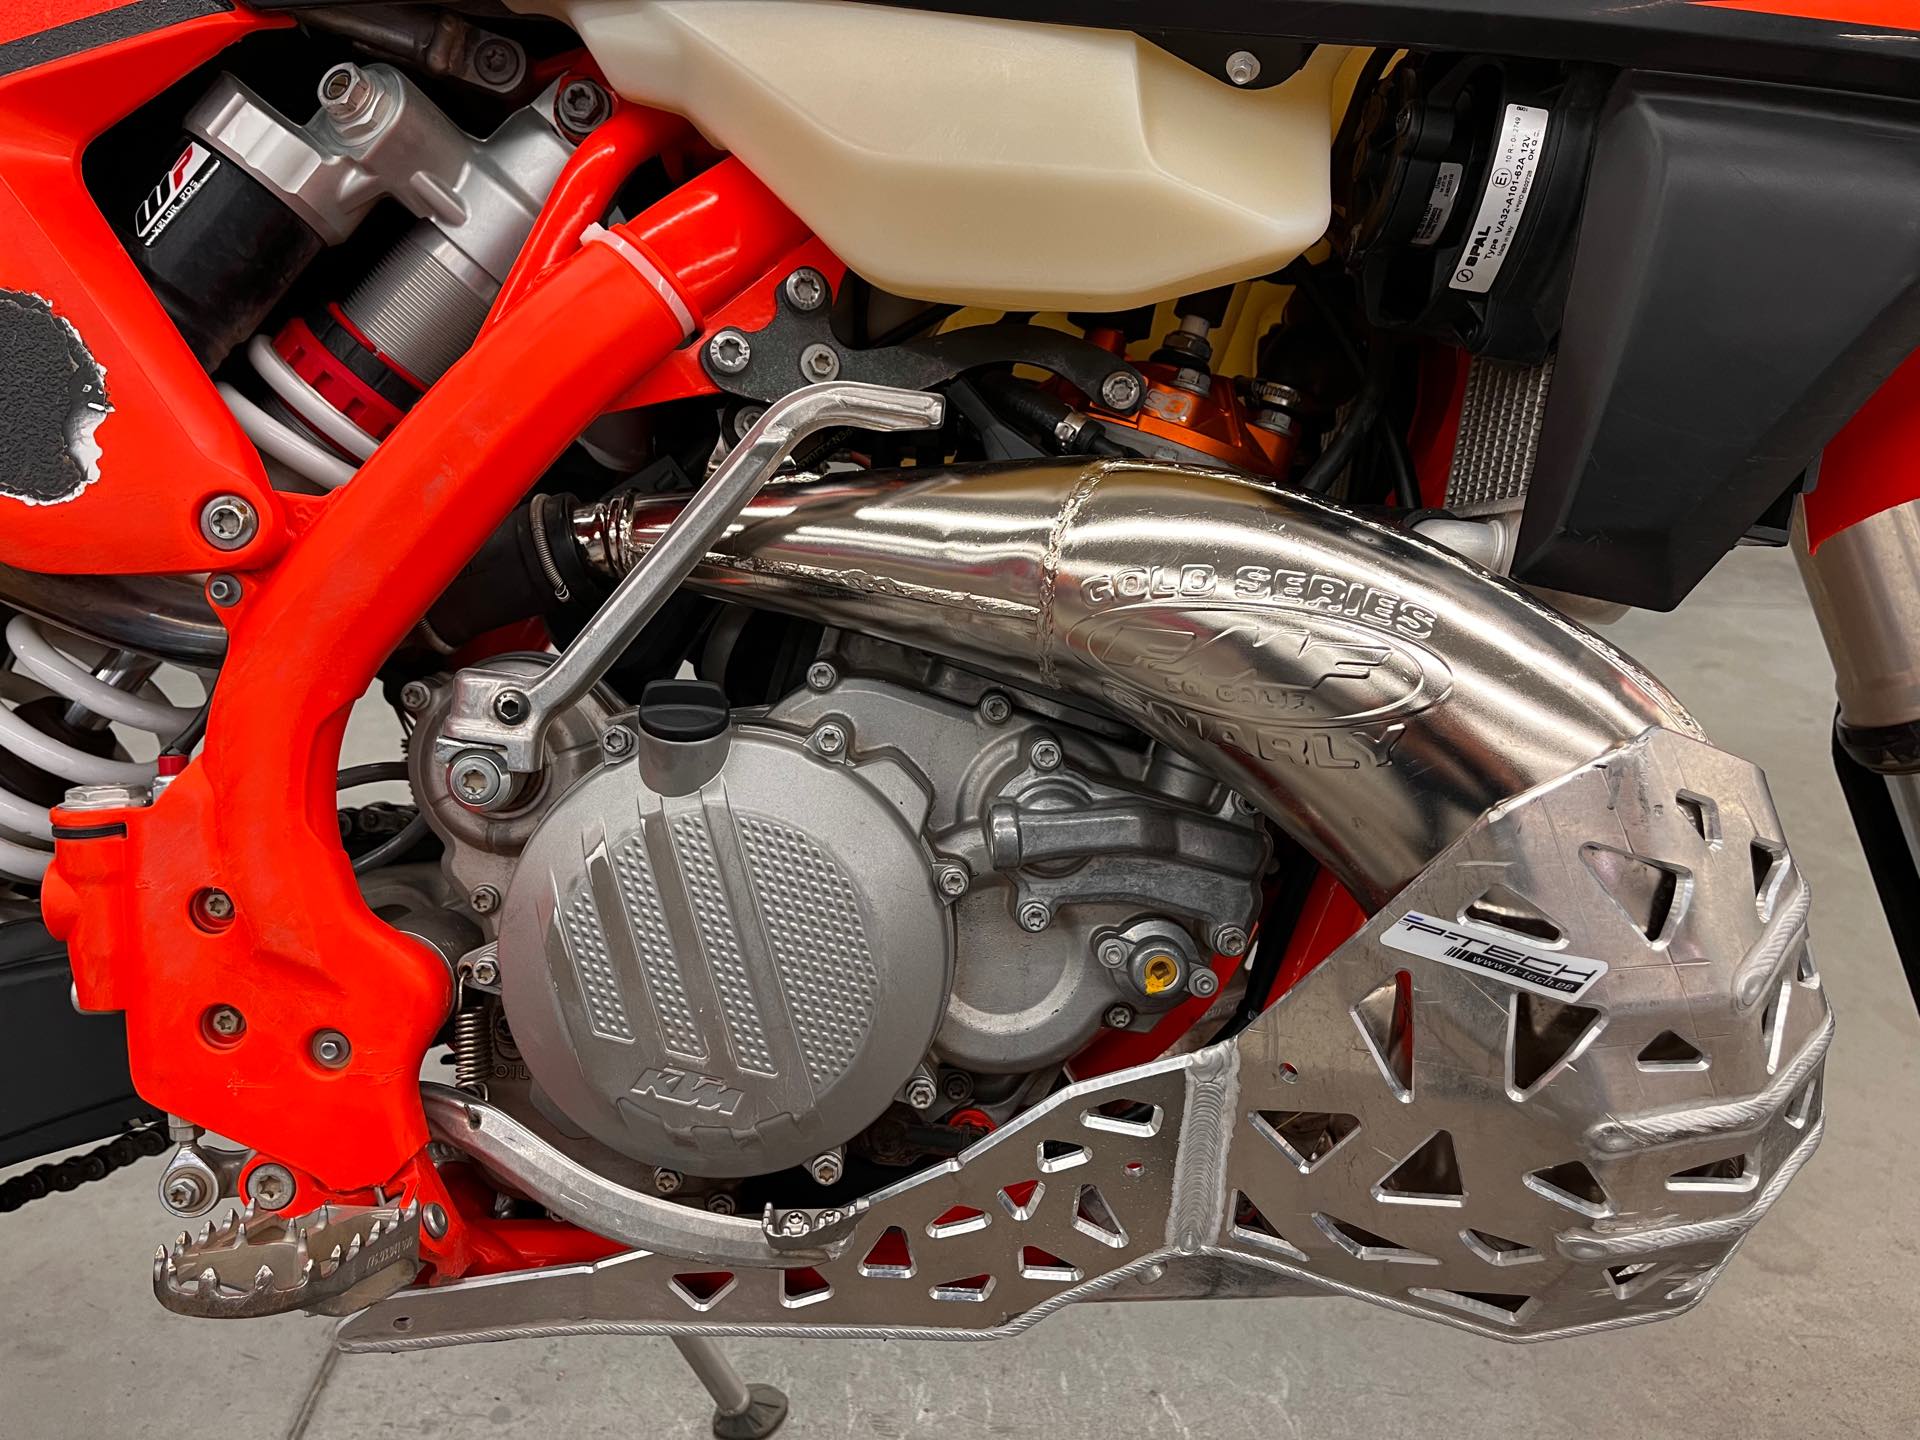 2019 KTM XC 300 W TPI at Aces Motorcycles - Denver